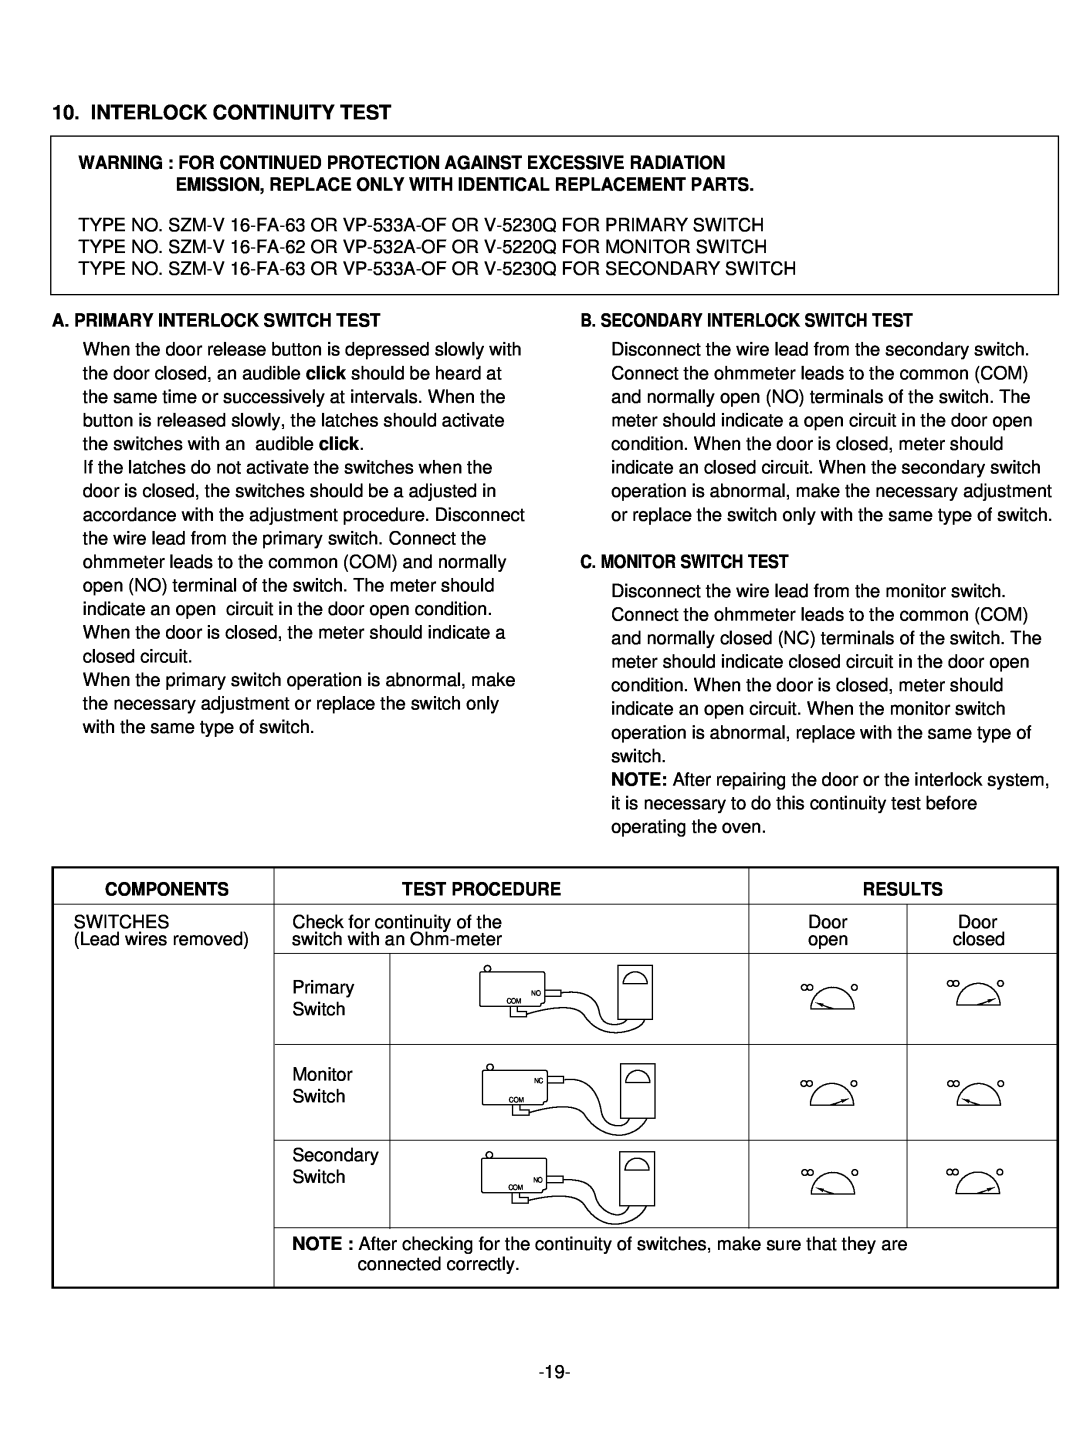 LG Electronics LRMM1430SW A. Primary Interlock Switch Test, B. Secondary Interlock Switch Test, C. Monitor Switch Test 